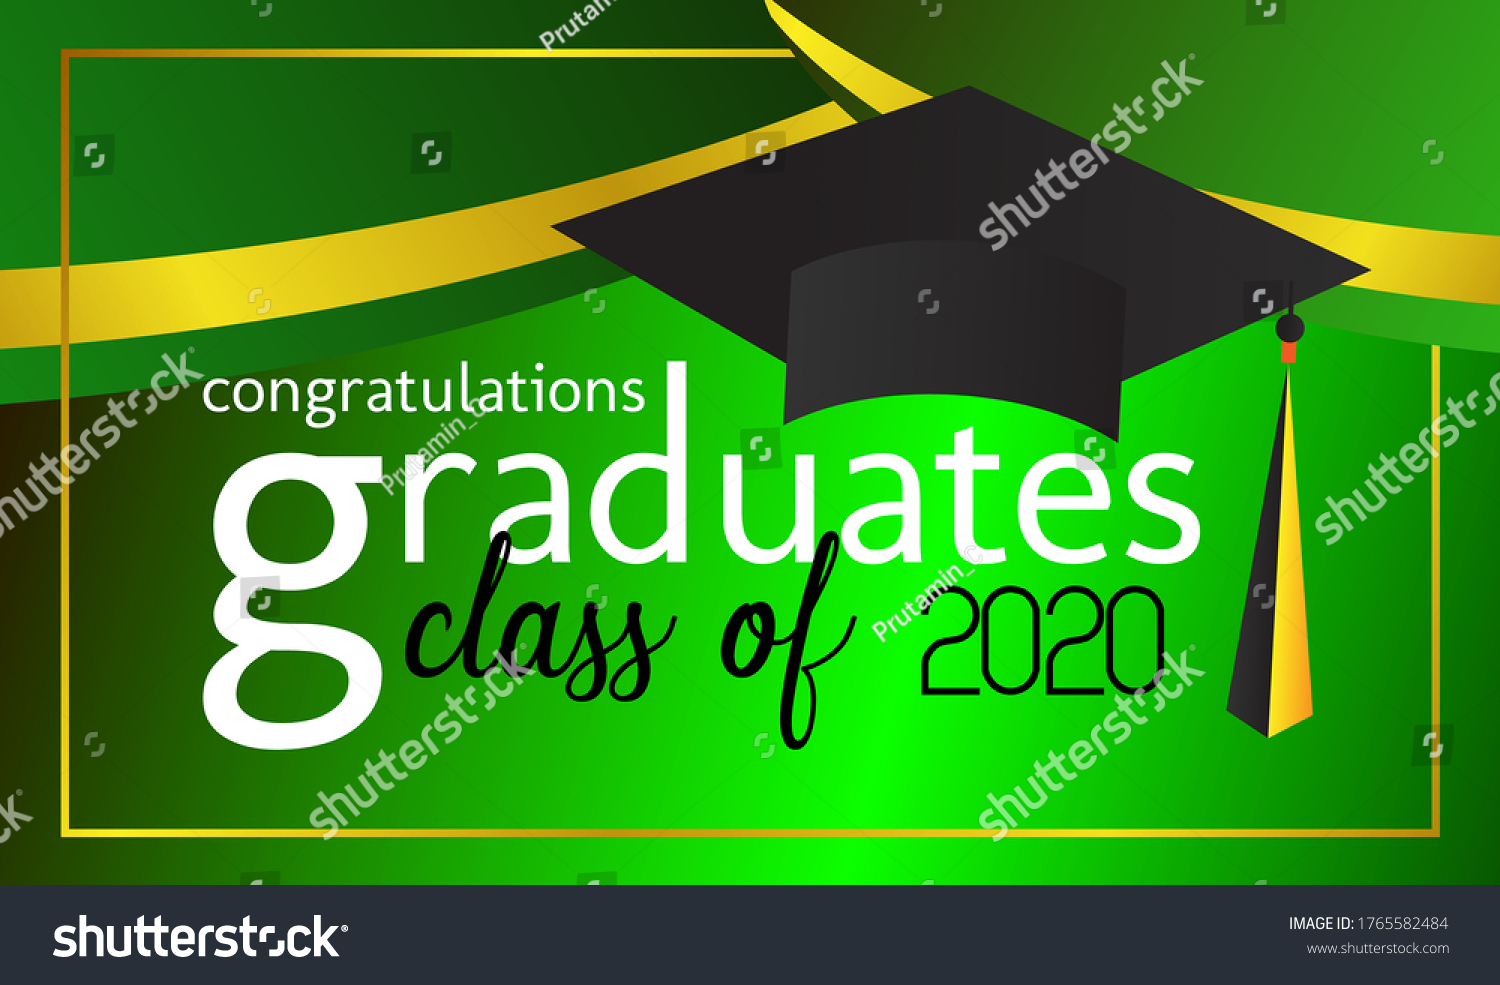 Congratulations Graduates Class 2020 Graphics Elements Stock Vector Royalty Free 1765582484 